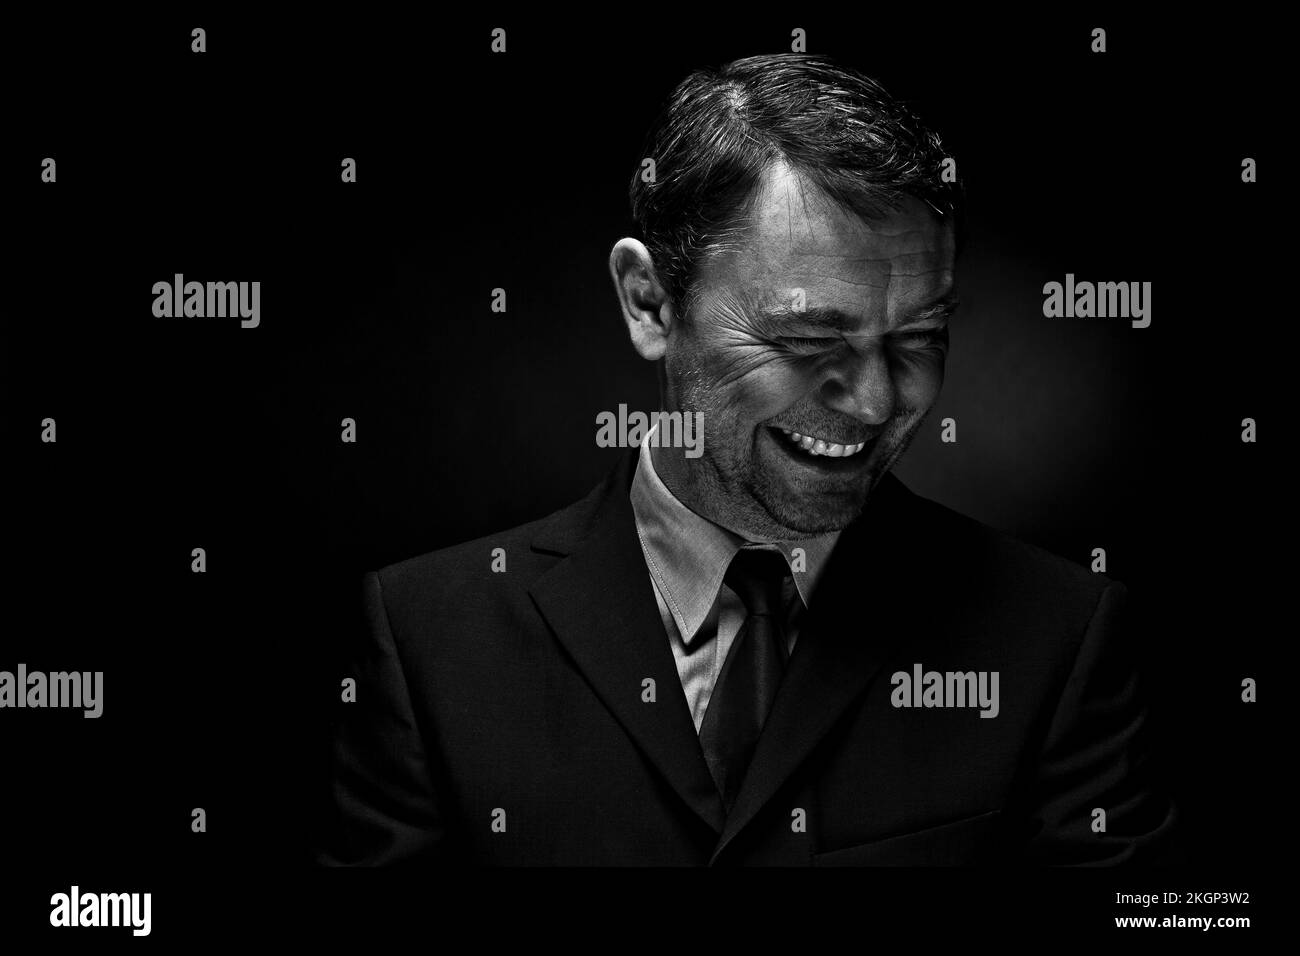 Mature man smiling against black background Stock Photo